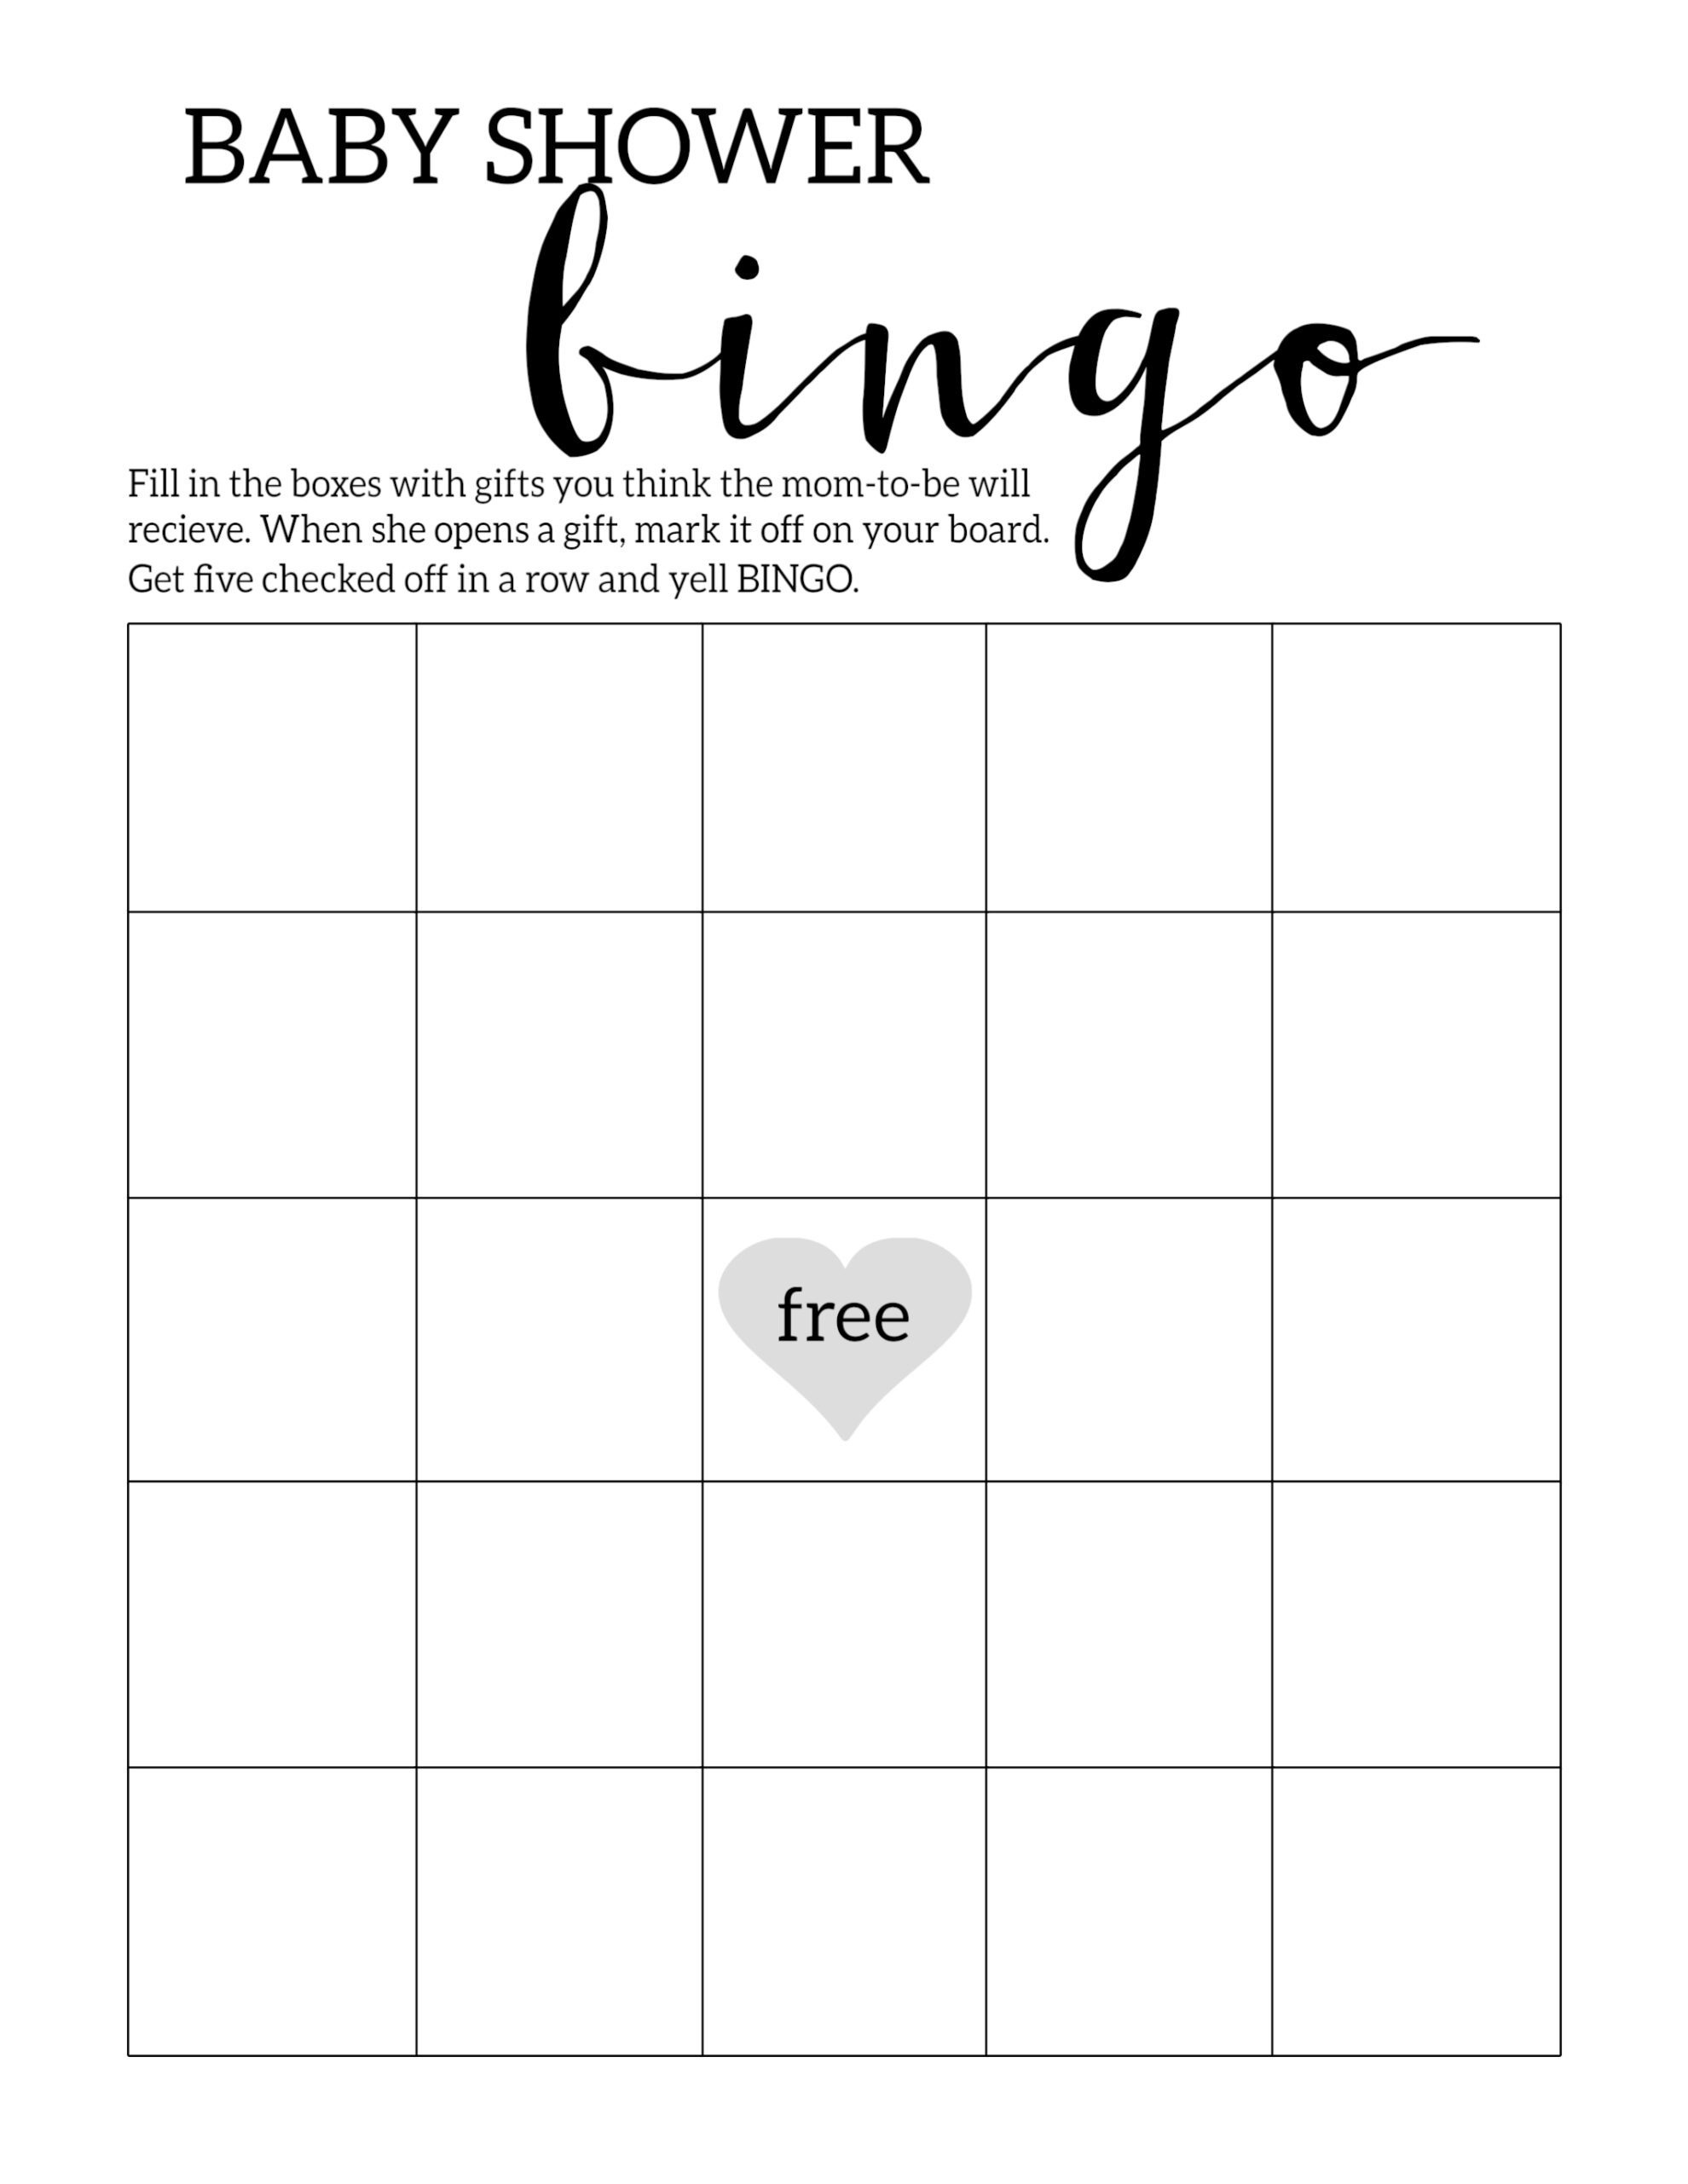 Baby Shower Bingo Printable Cards Template - Paper Trail Design - Free Printable Bingo Games